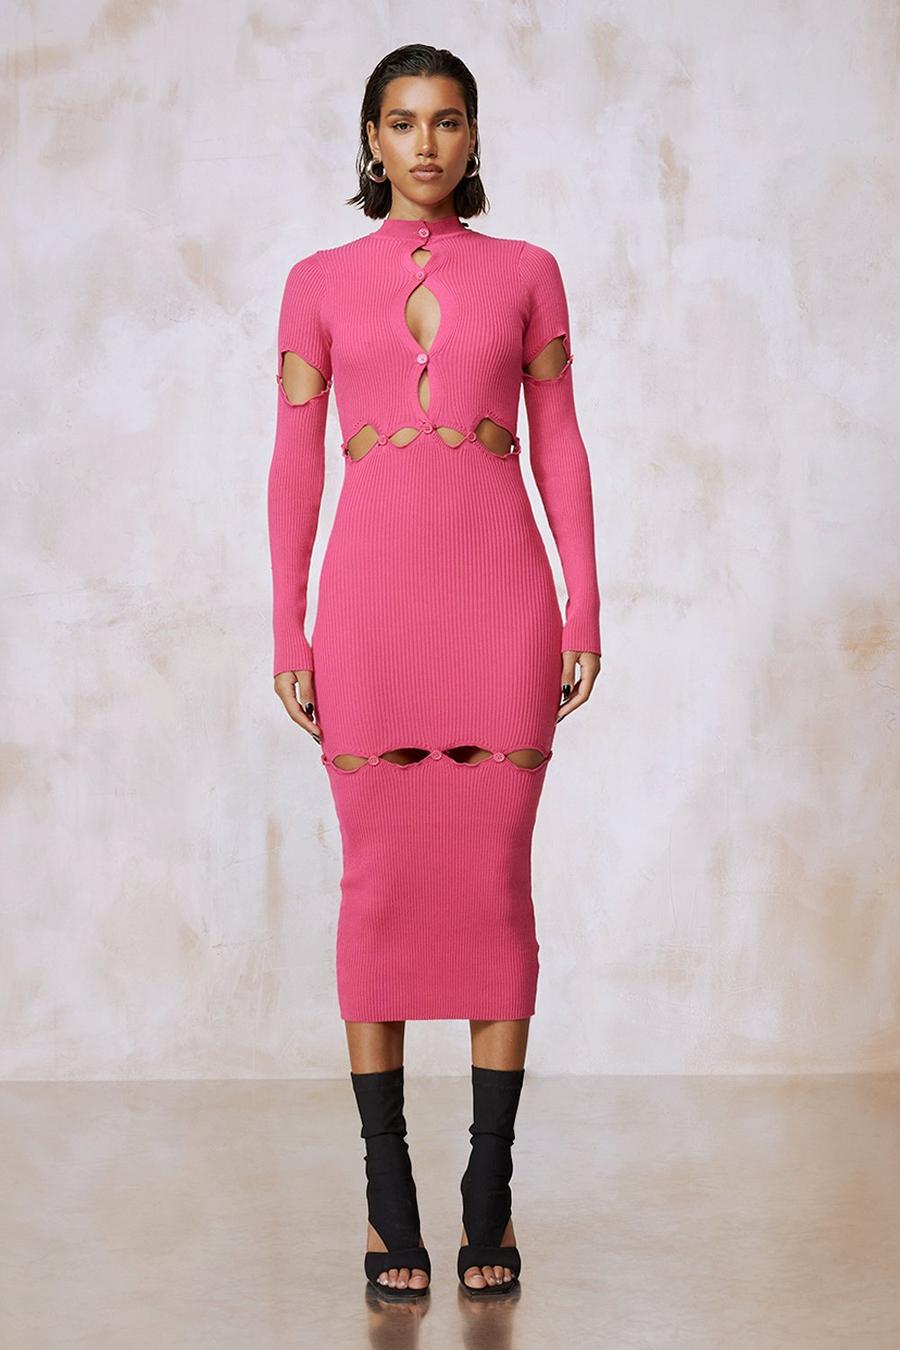 Pink Kourtney Kardashian Barker Multiway Knitted Dress